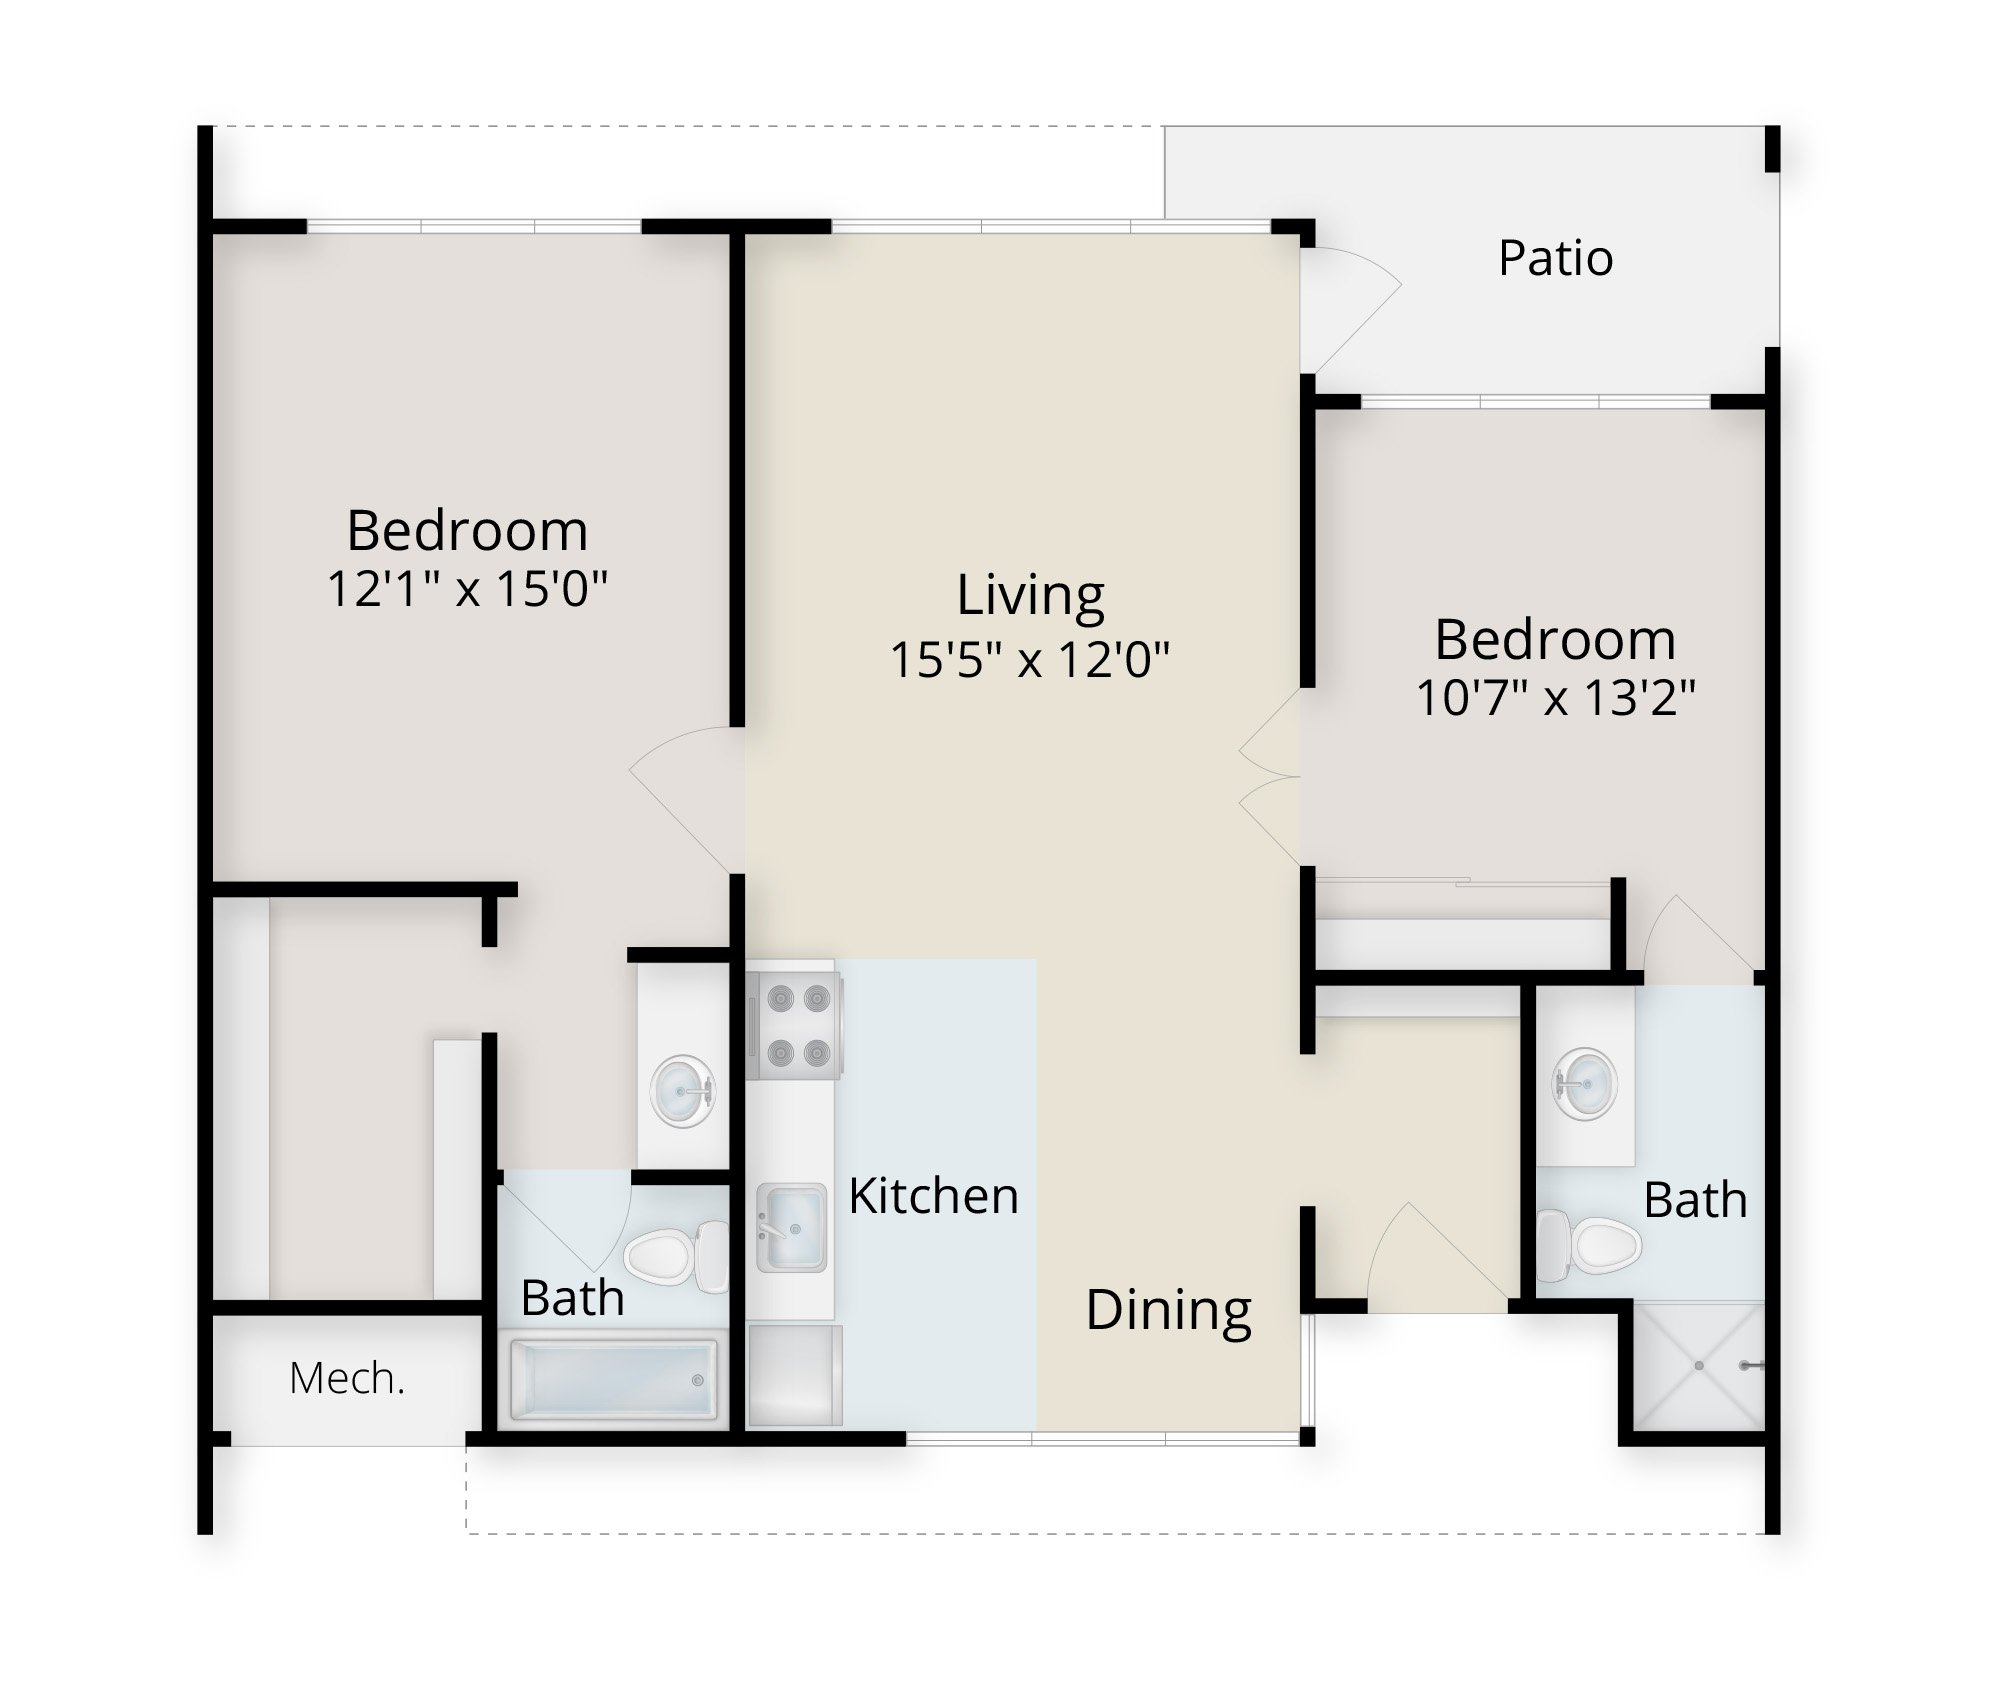 Independent living villa floor plan with 2 bedrooms and 2 bathrooms